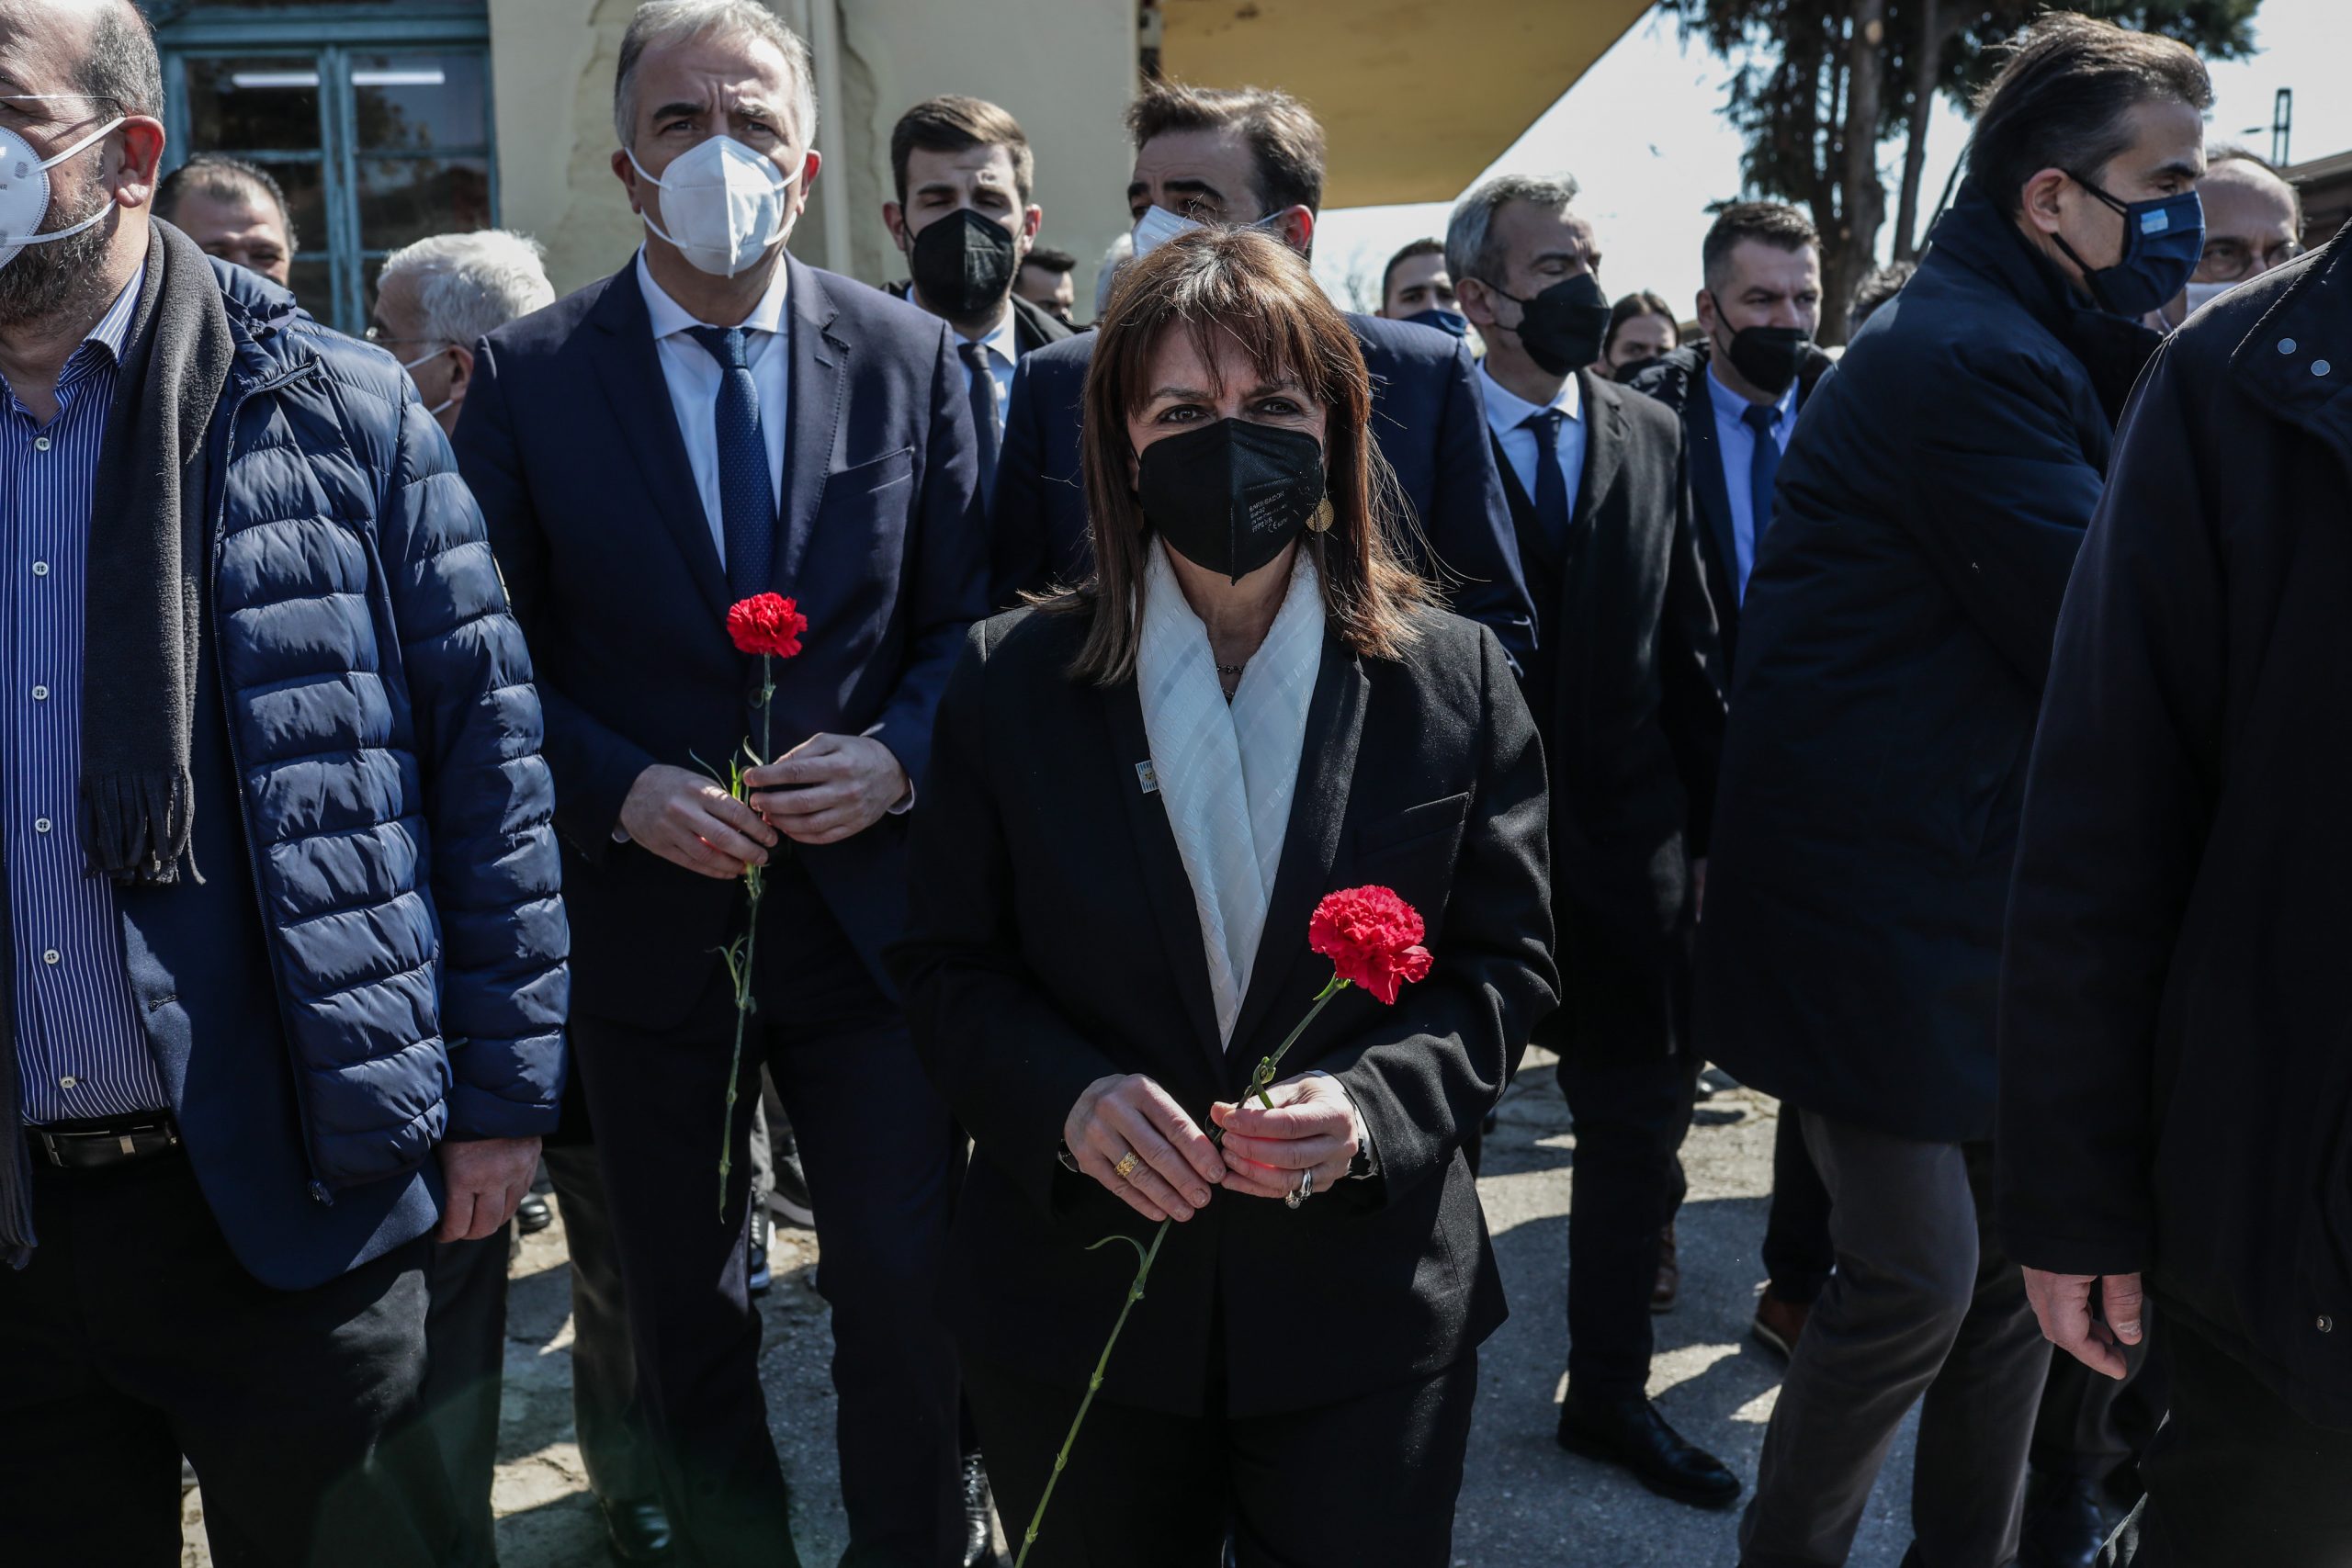 H Πρόεδρος της Δημοκρατίας Κατερίνα Σακελλαροπούλου κρατά ένα γαρίφαλο στη σιωπηλή πορεία μνήμης για τα θύματα του Ολοκαυτώματος από το μνημείο Ολοκαυτώματος στην πλατεία Ελευθερίας με προορισμό τον παλαιό σιδηροδρομικό σταθμό, την Κυριακή 20 Μαρτίου 2022. Παρουσία της Προέδρου της Δημοκρατίας Κατερίνας Σακελλαροπούλου πραγματοποιείται η σιωπηλή πορεία μνήμης για τα θύματα του Ολοκαυτώματος υπό τον τίτλο «Ποτέ ξανά, Θεσσαλονίκη-Άουσβιτς – 79 χρόνια από την αναχώρηση του πρώτου συρμού», όπου θανατώθηκαν 50.000 Θεσσαλονικείς Εβραίοι. ΑΠΕ ΜΠΕ/ ΠΡΟΕΔΡΙΑ ΤΗΣ ΔΗΜΟΚΡΑΤΙΑΣ/ ΜΑΝΩΛΟΠΟΥΛΟΣ ΘΕΟΔΩΡΟΣ